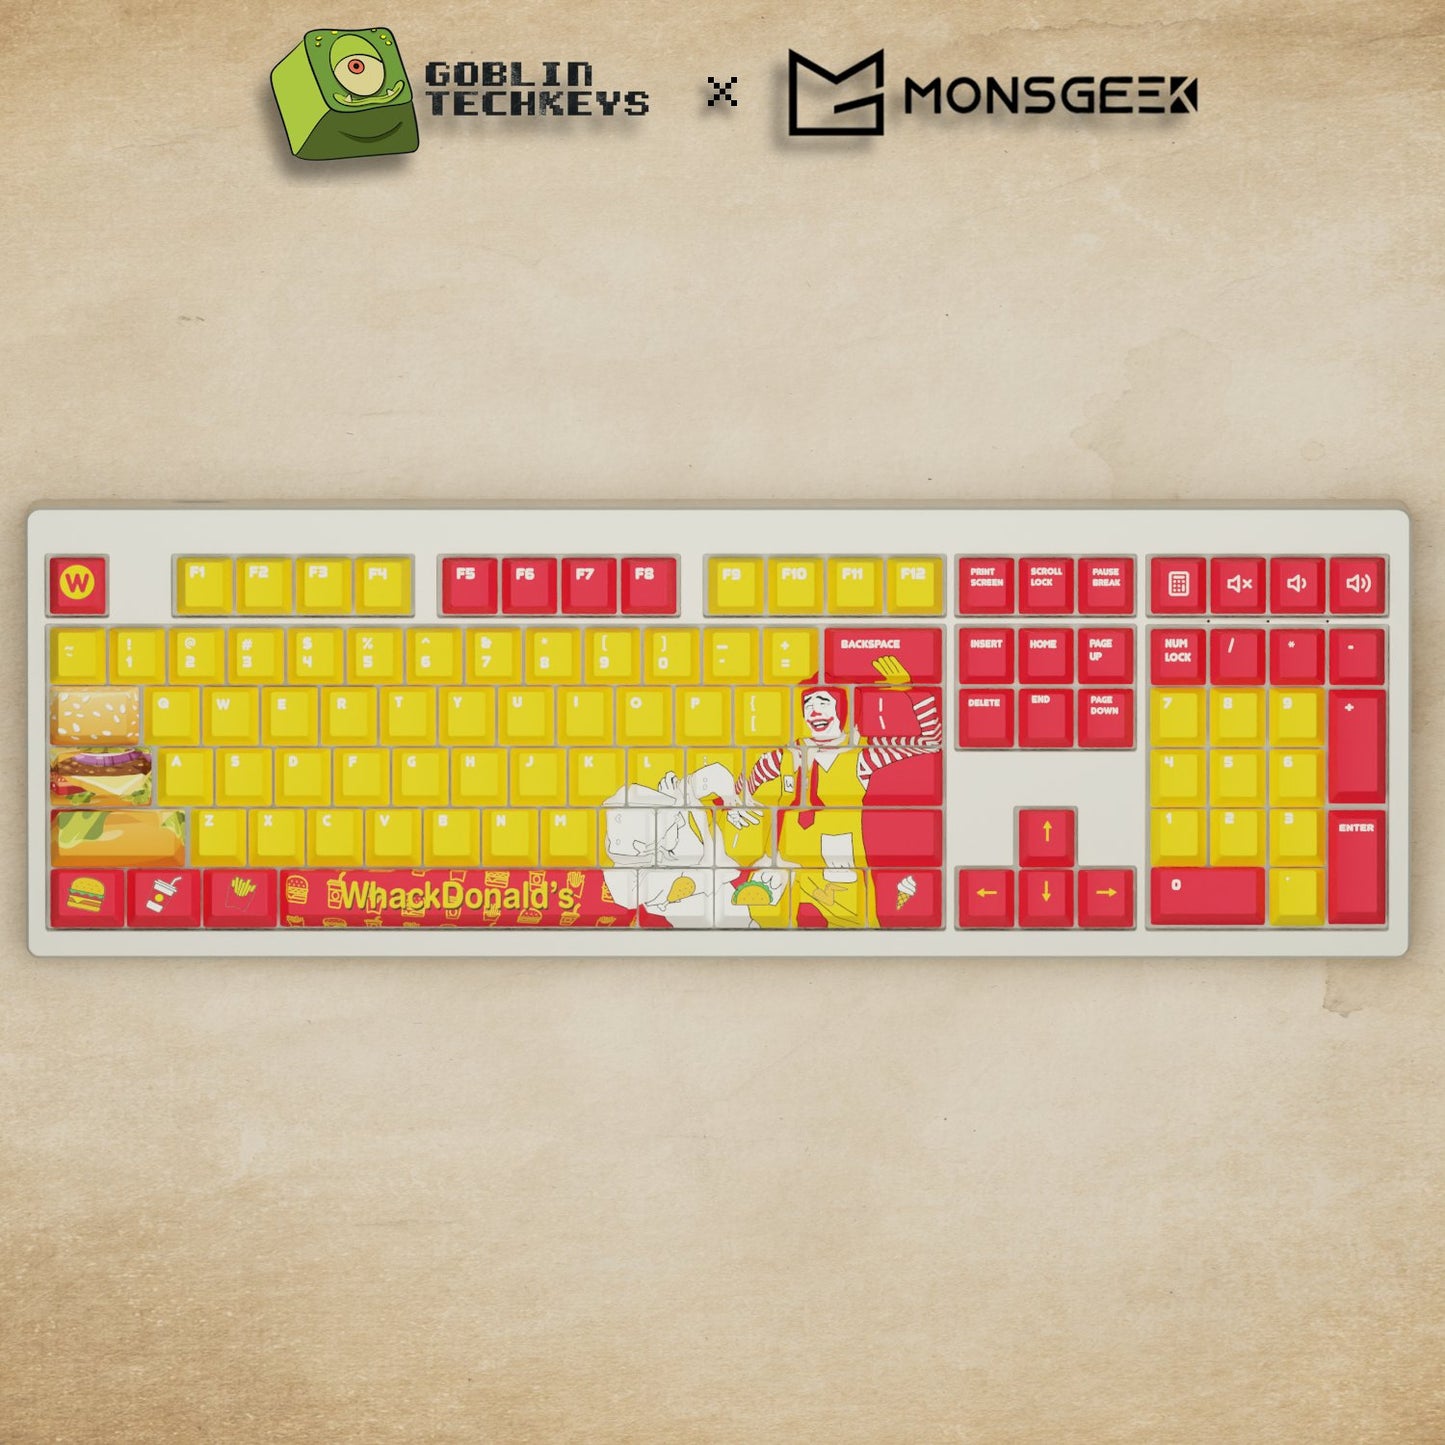 Monsgeek M5 - 100% Whackdonald Mechanical Keyboard - Goblintechkeys